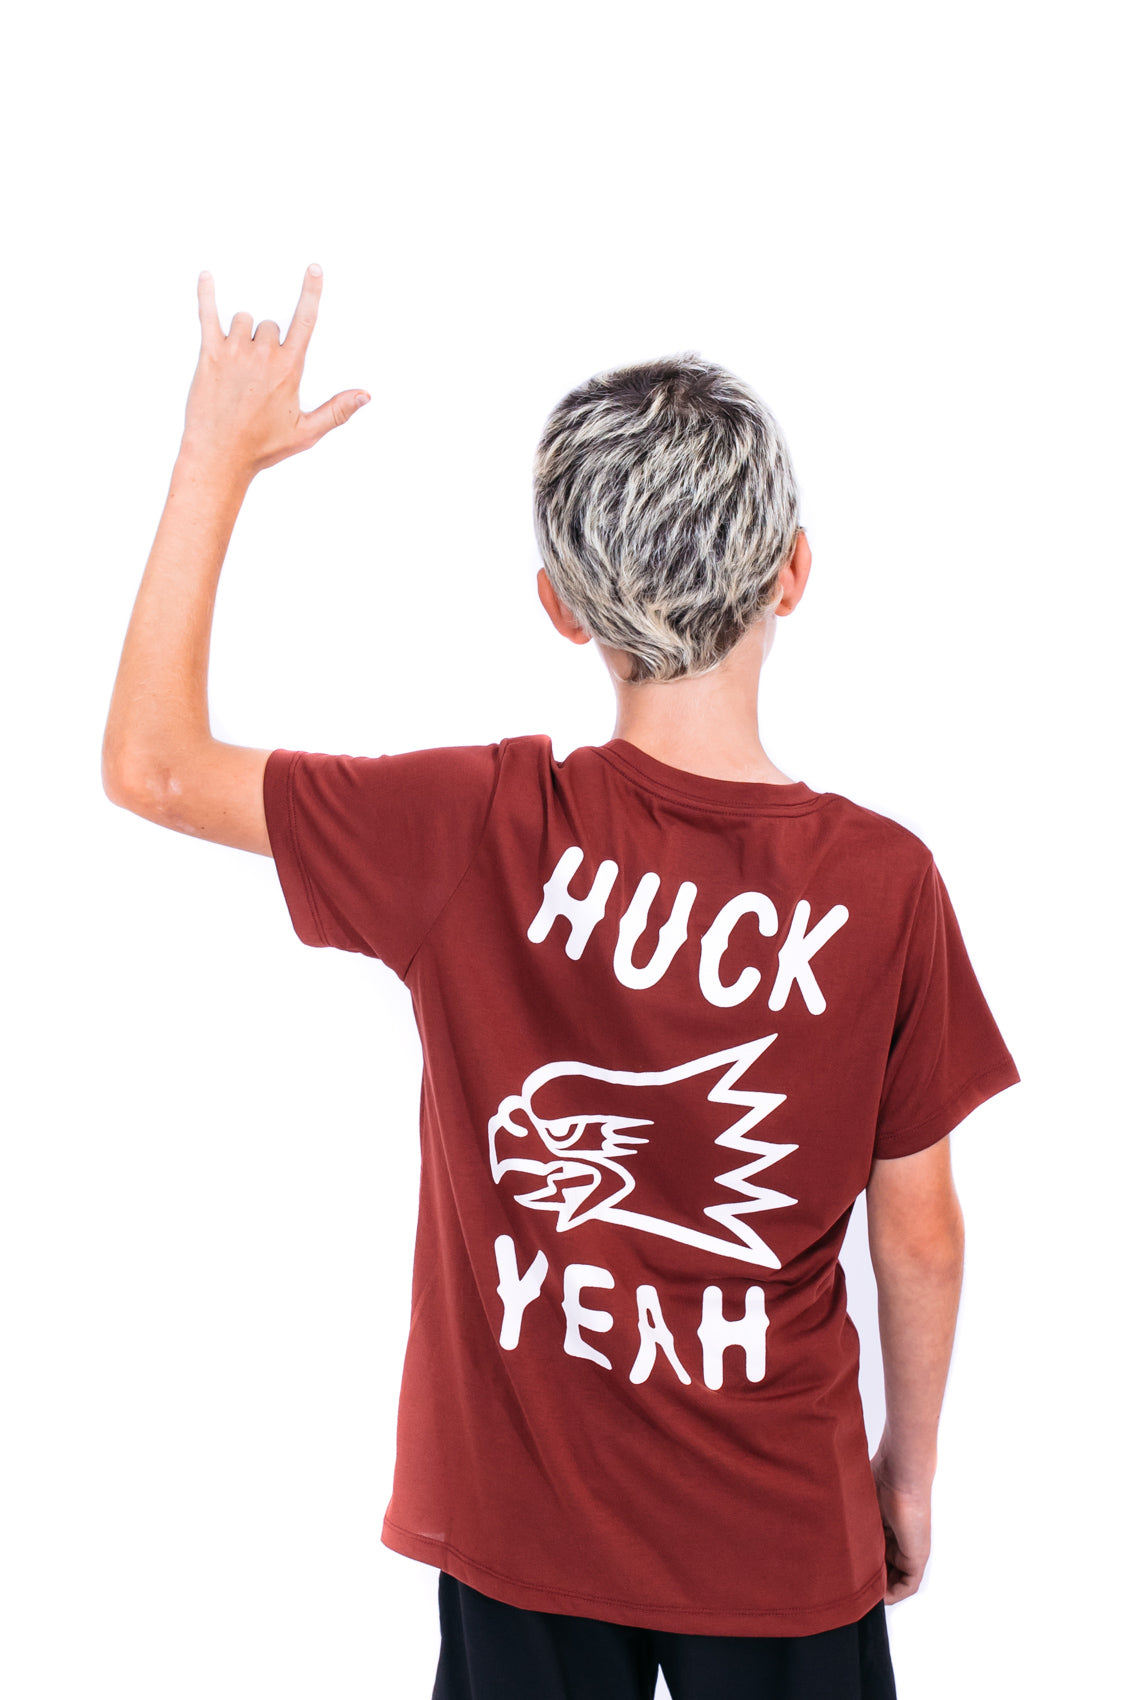 “Huck Yeah” YOUTH S/S Tech Tee Maroon